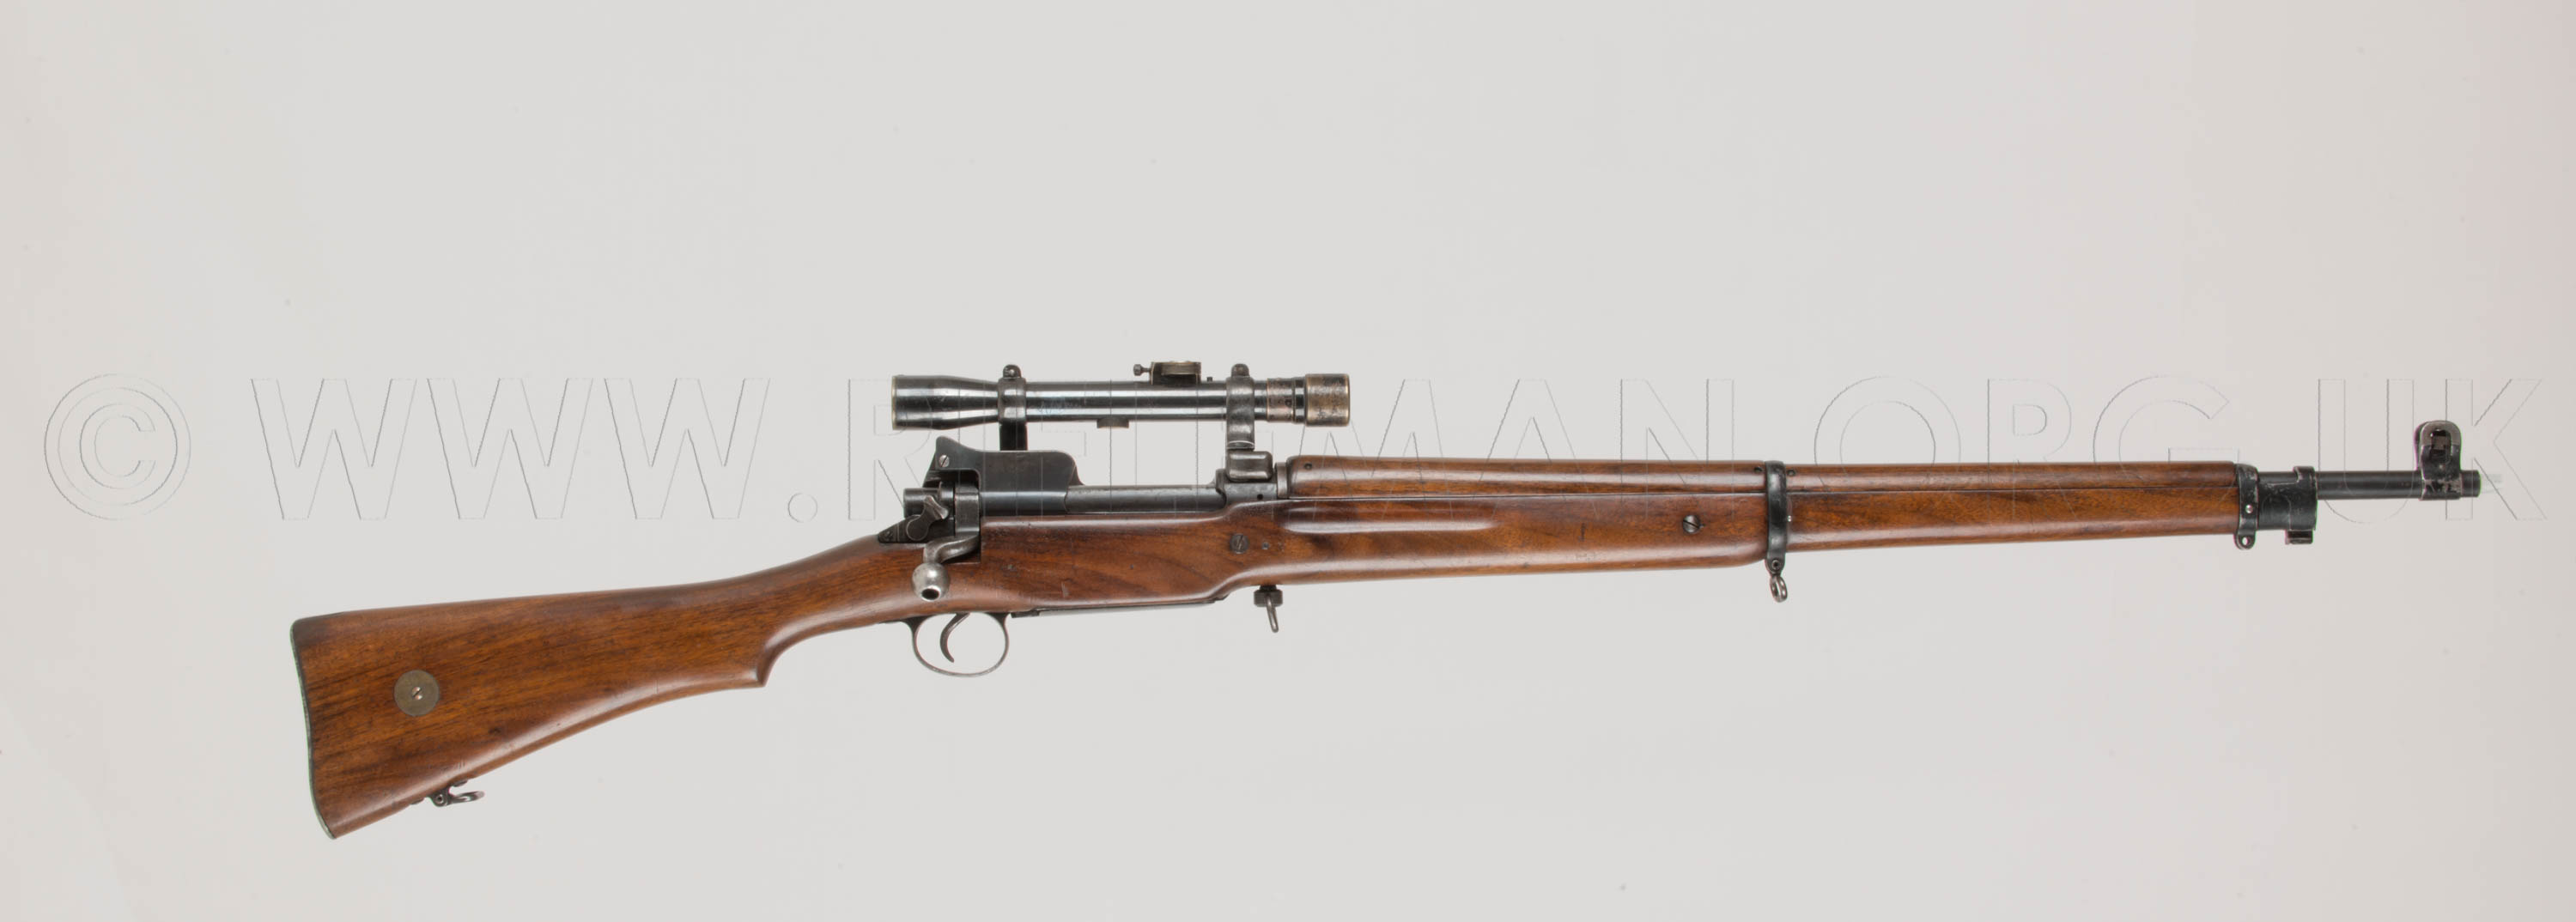 Enfield No.3(T) Mk.1* sniper rifle of WW1